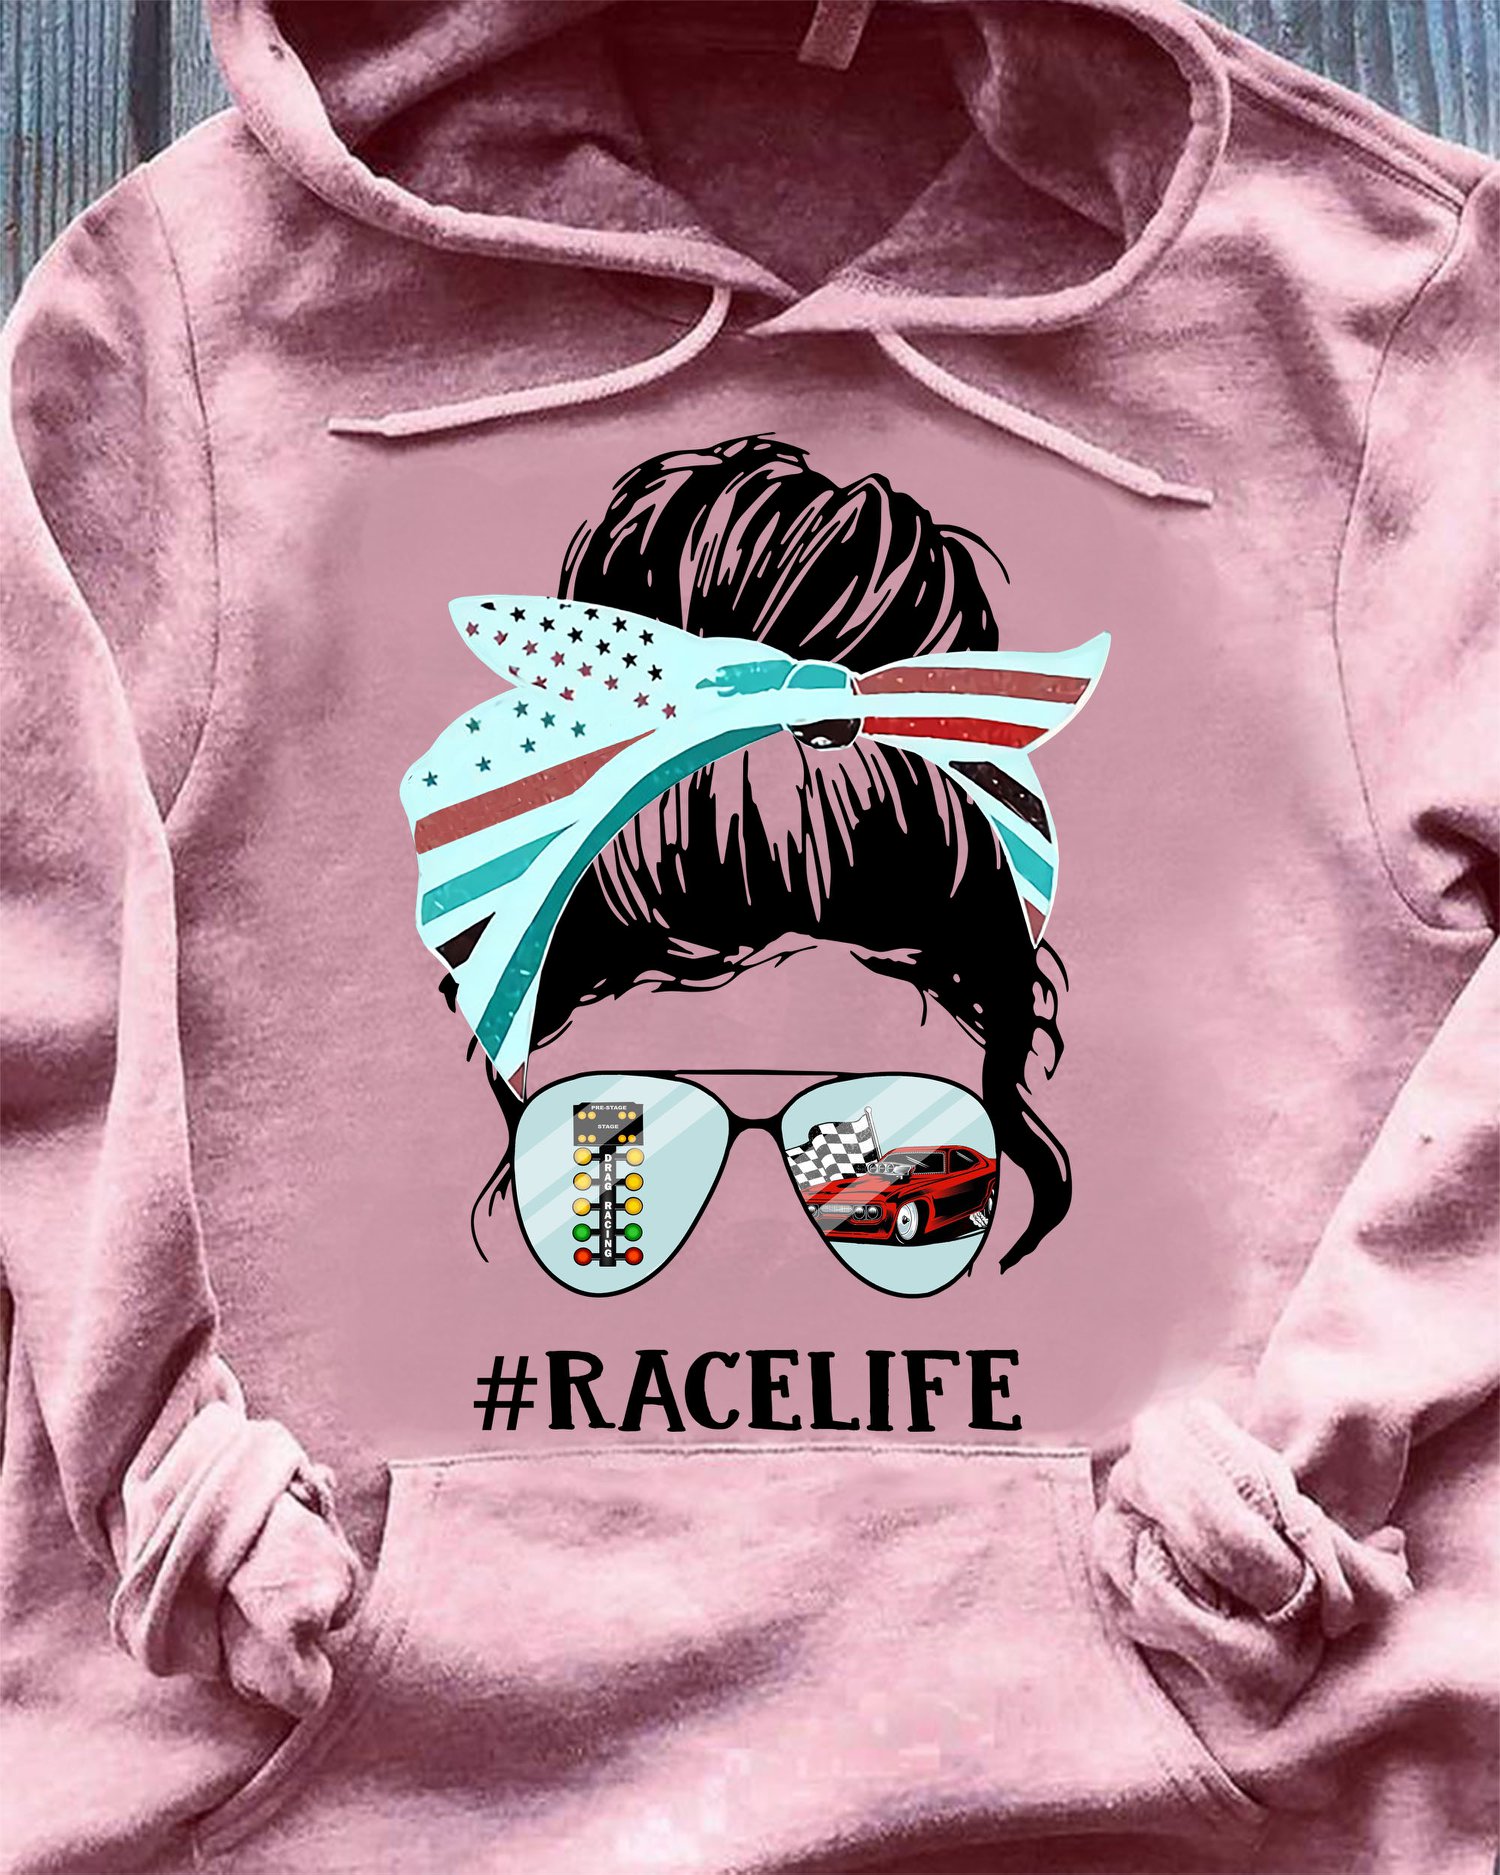 Race life, love dirty track racing, woman face